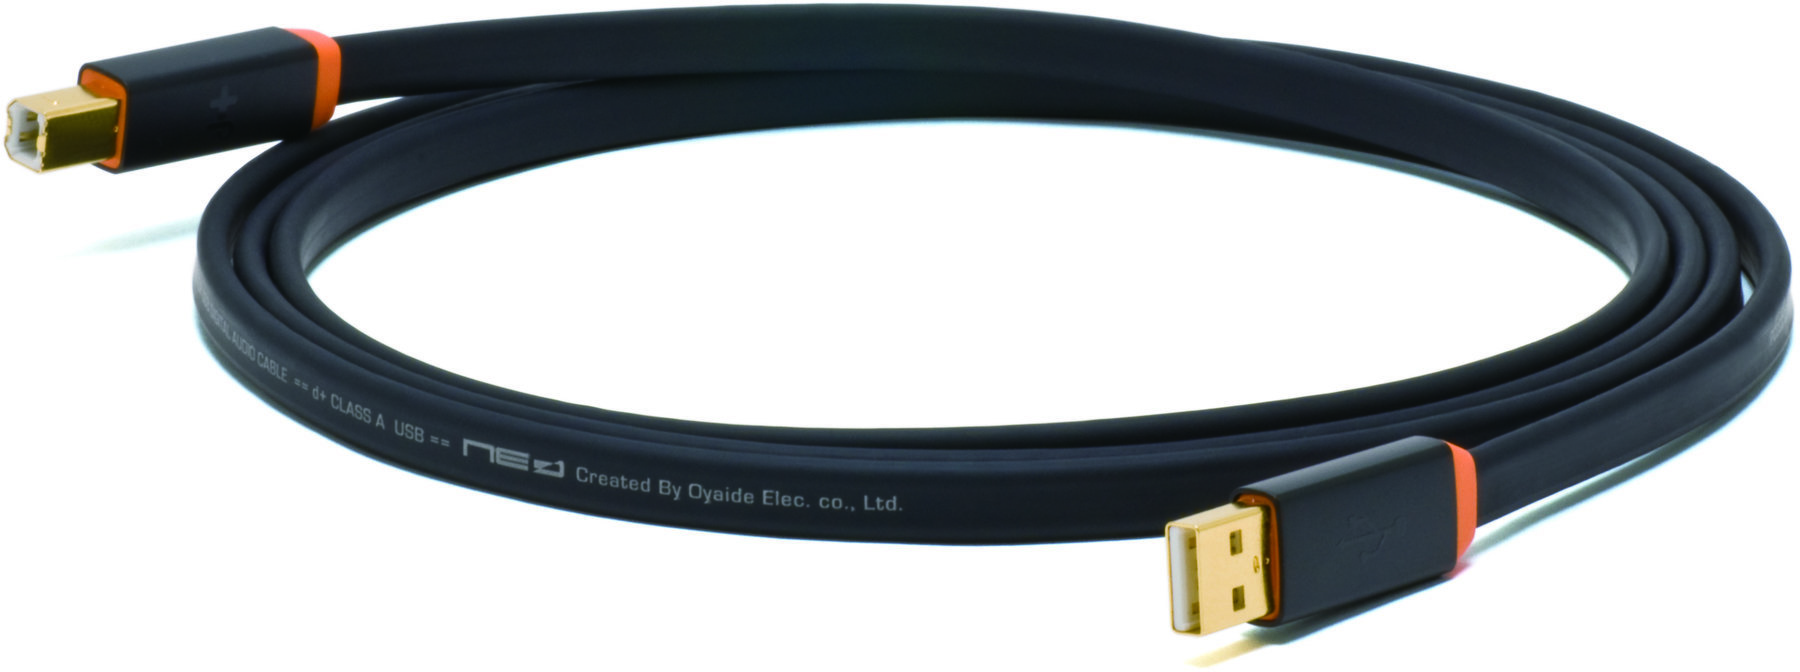 Kabel USB Oyaide NEO d+ USB 2.0 Class A 3m